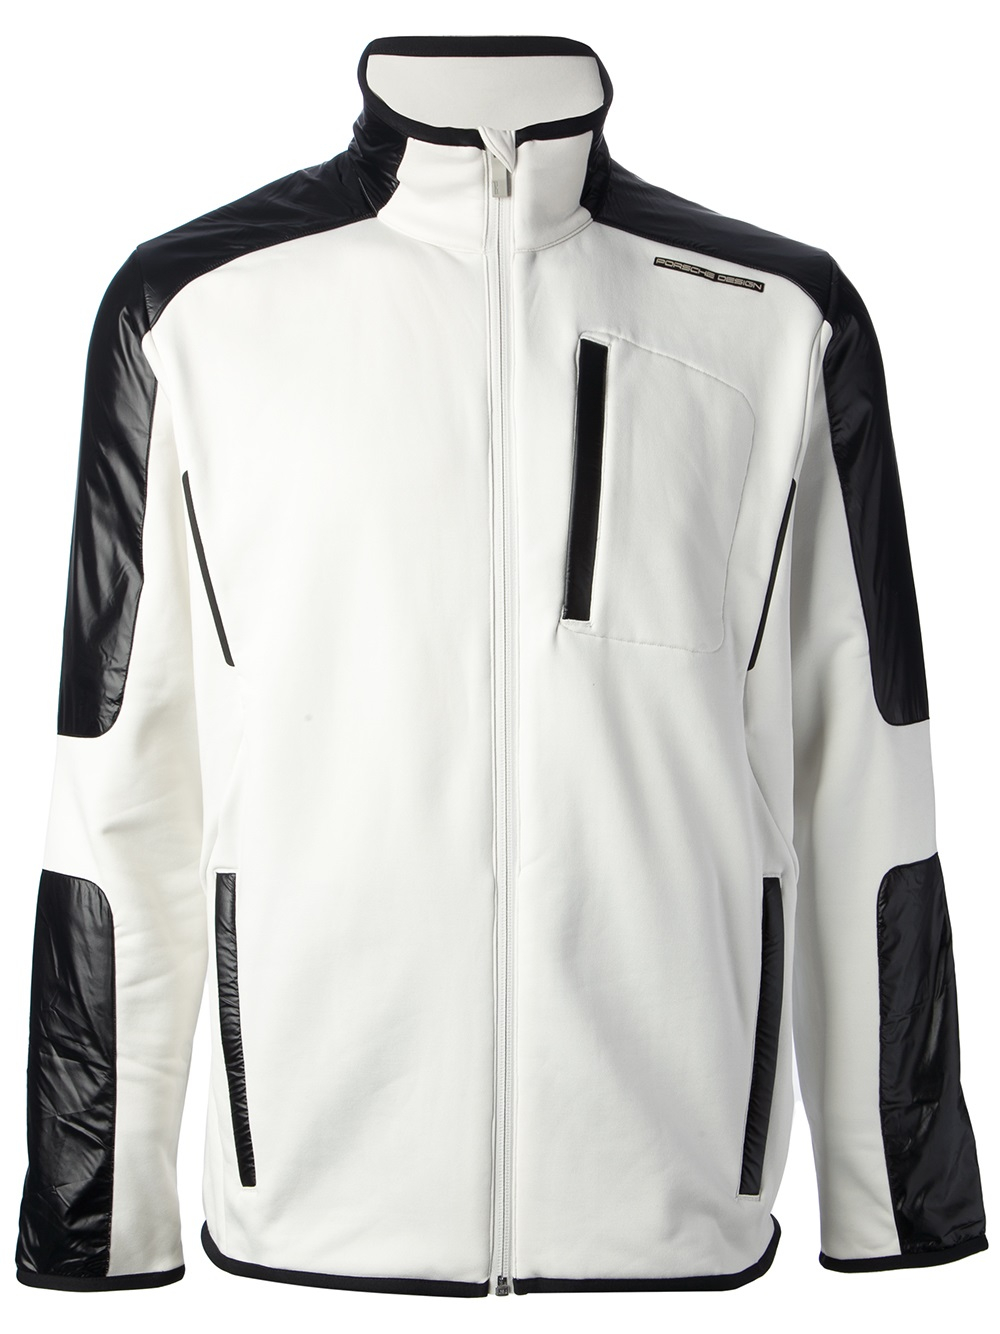 Lyst - Porsche Design Zipped Jacket in White for Men